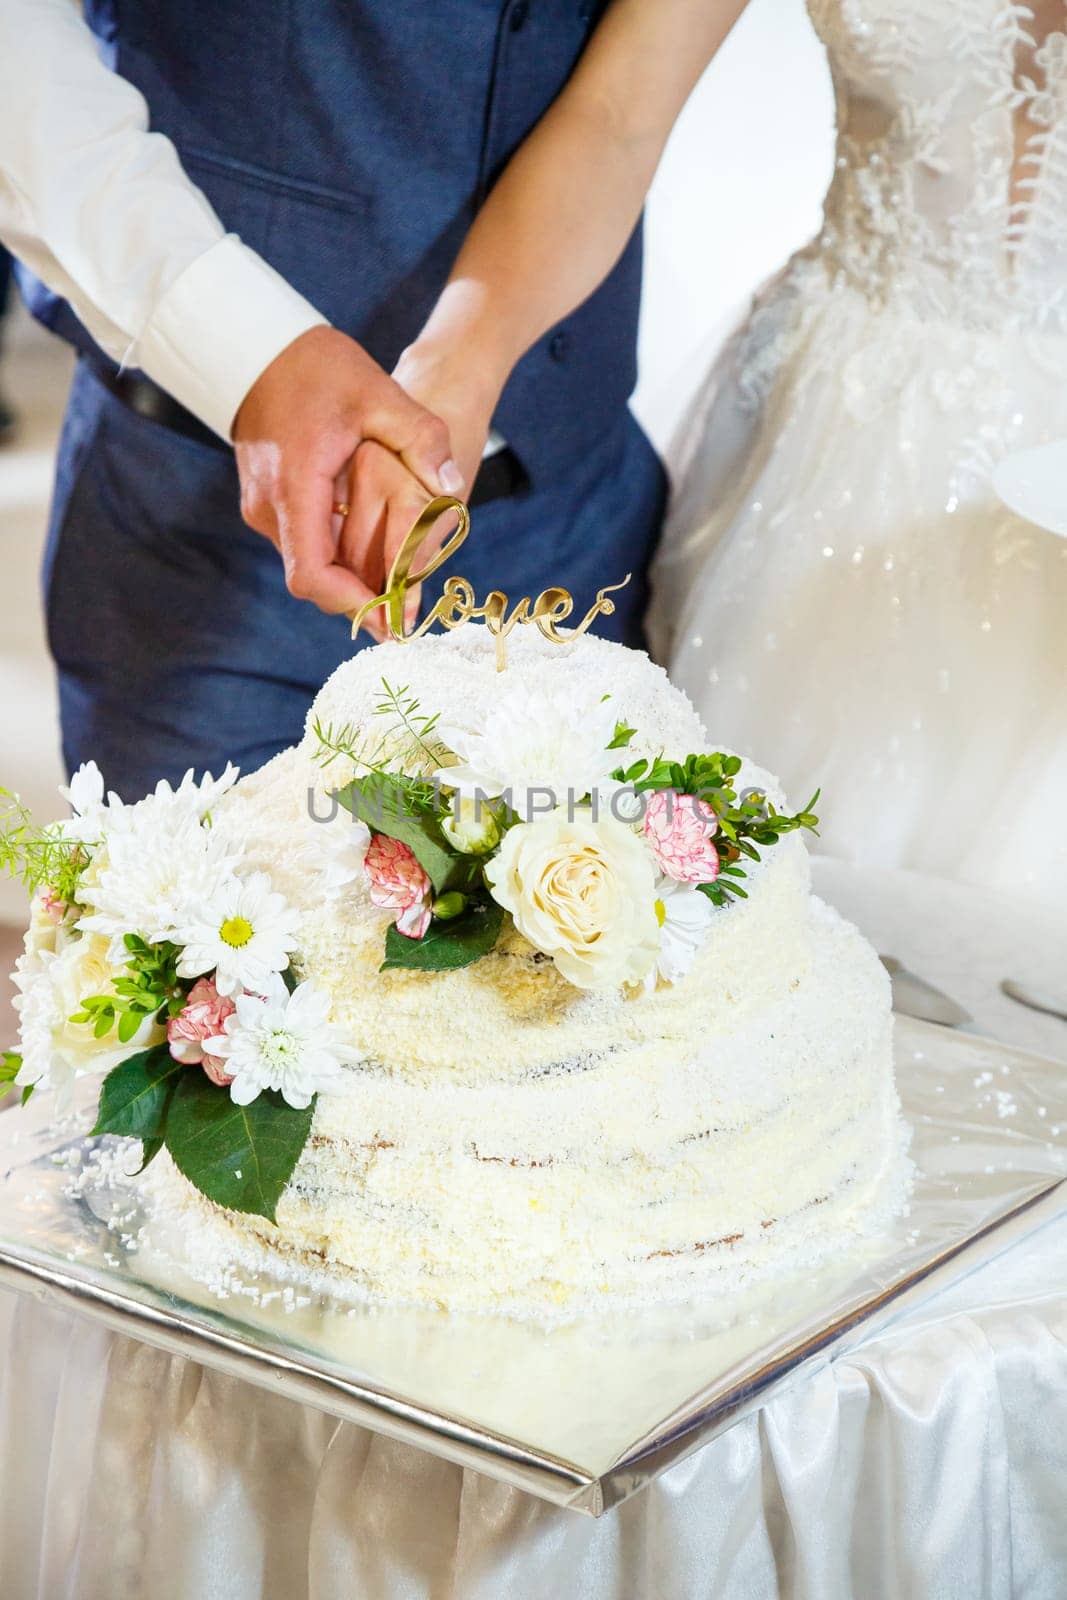 Beautiful and sweet wedding cake for newlyweds by Dmitrytph